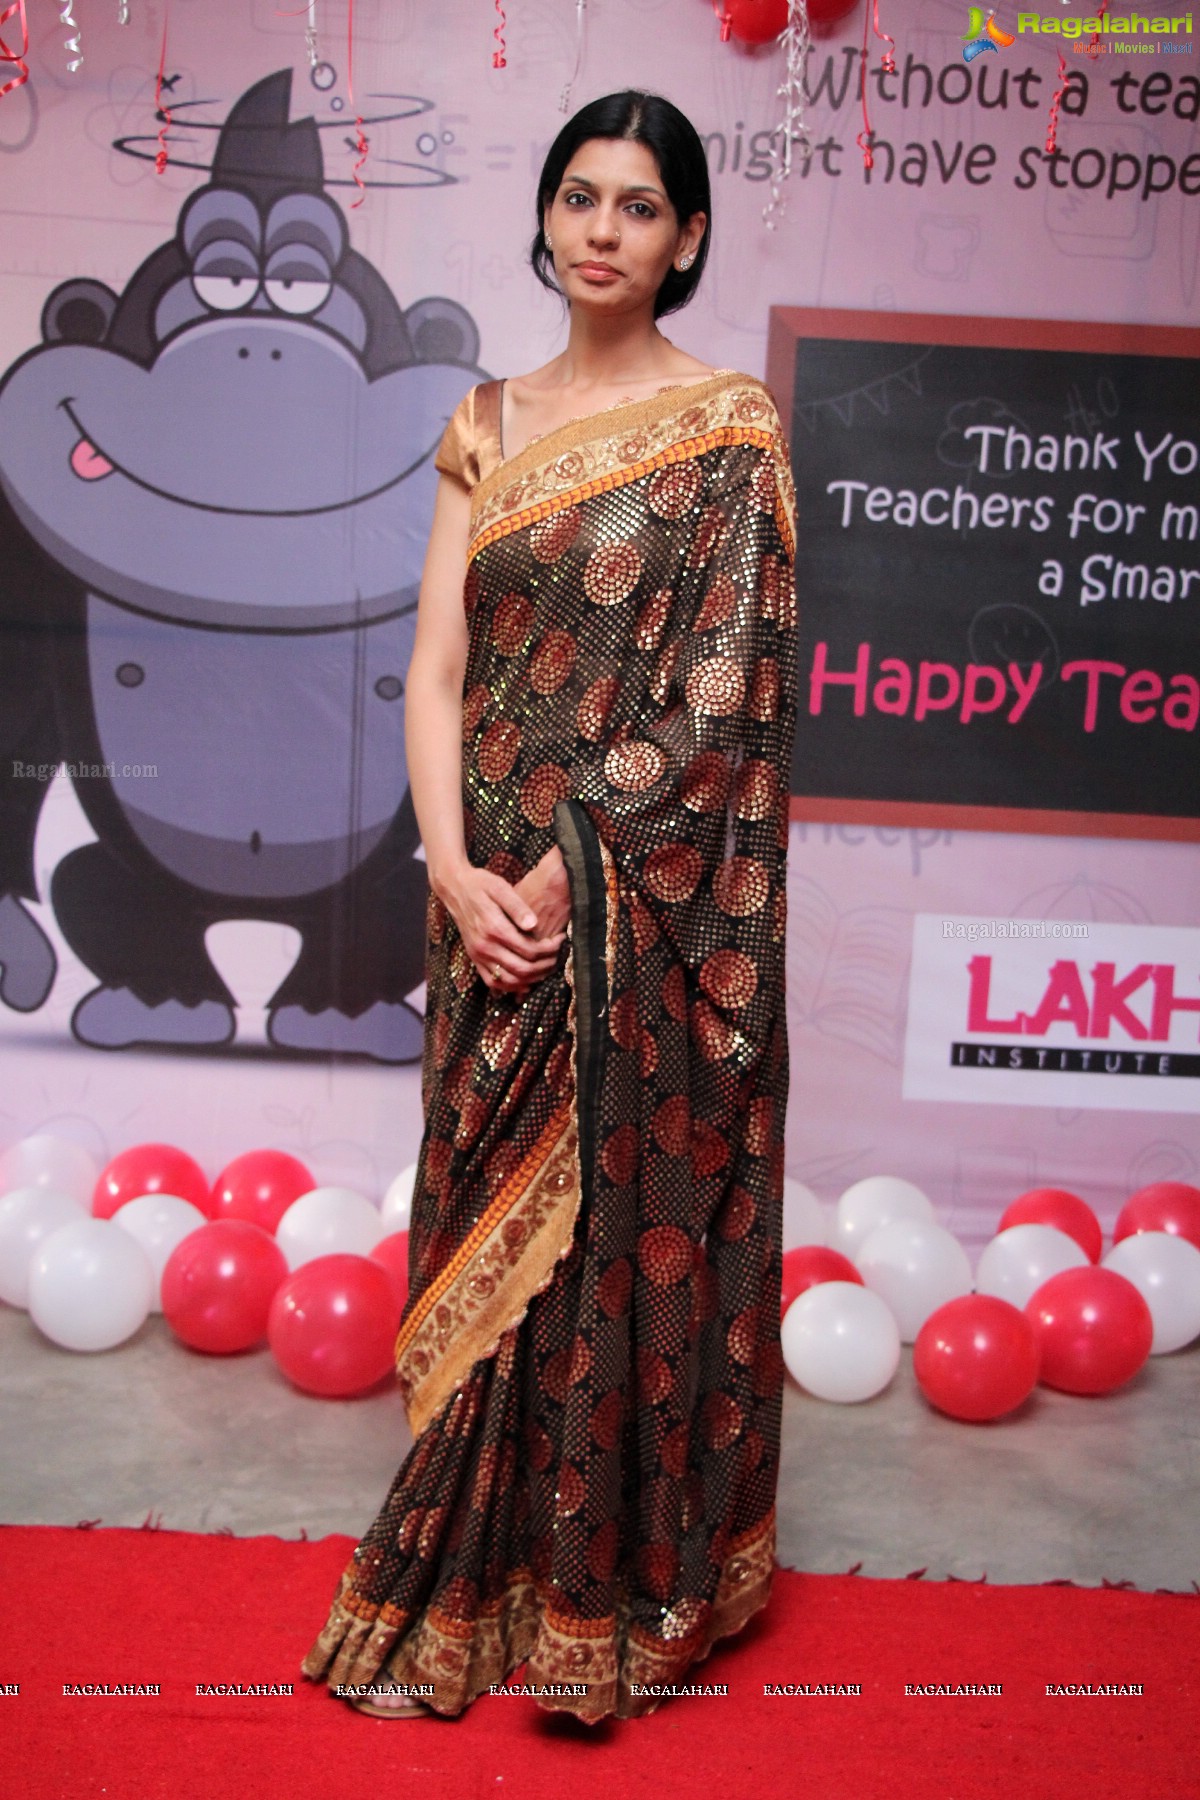 Lakhotia Institute of Design celebrates Teacher's Day, Hyderabad